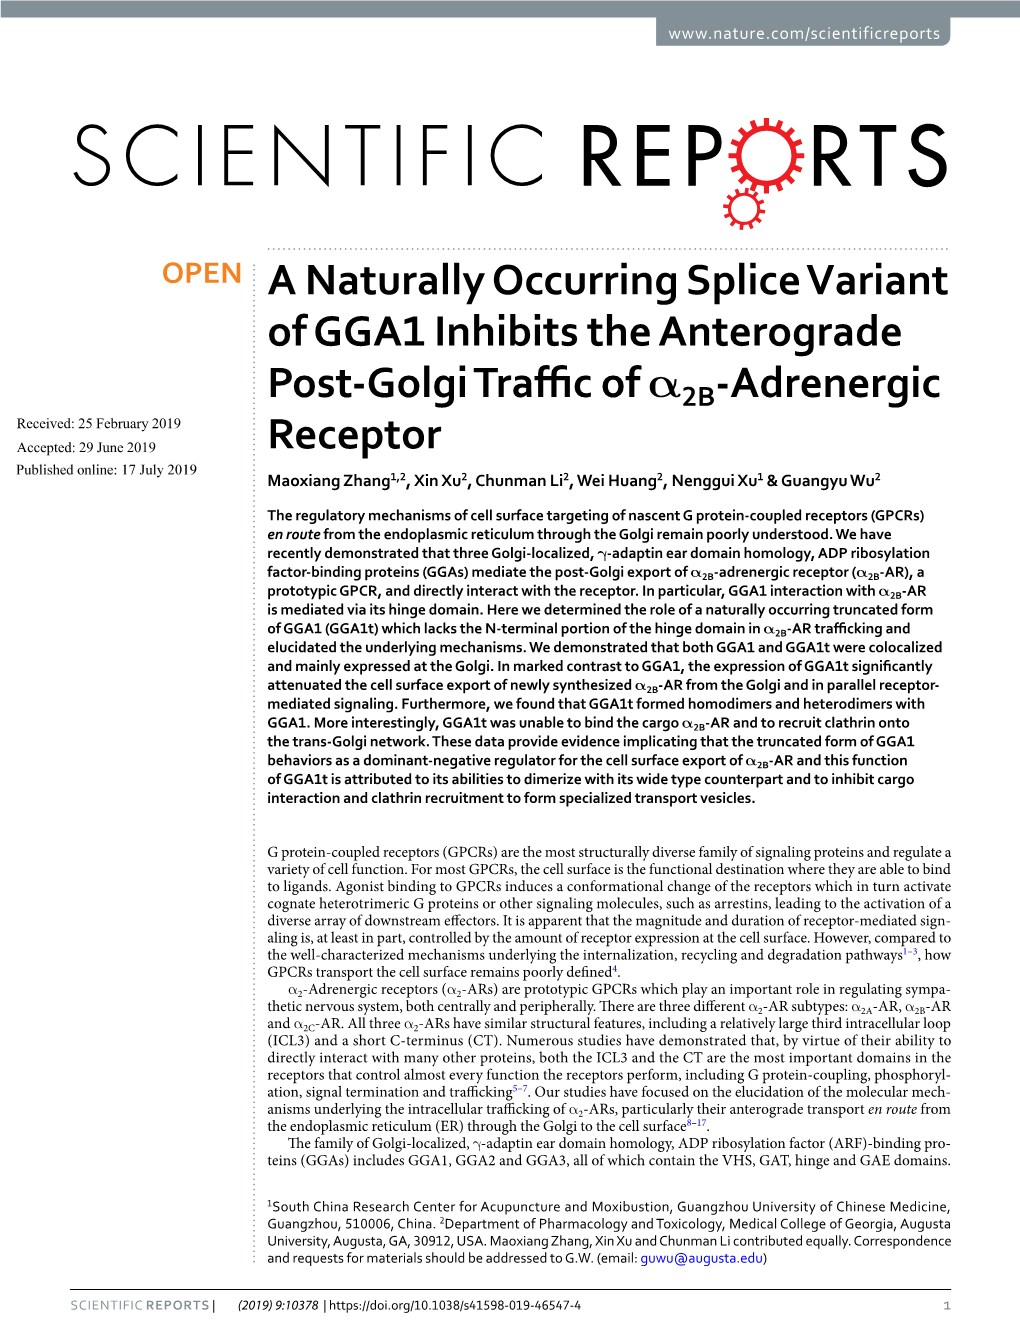 A Naturally Occurring Splice Variant of GGA1 Inhibits the Anterograde